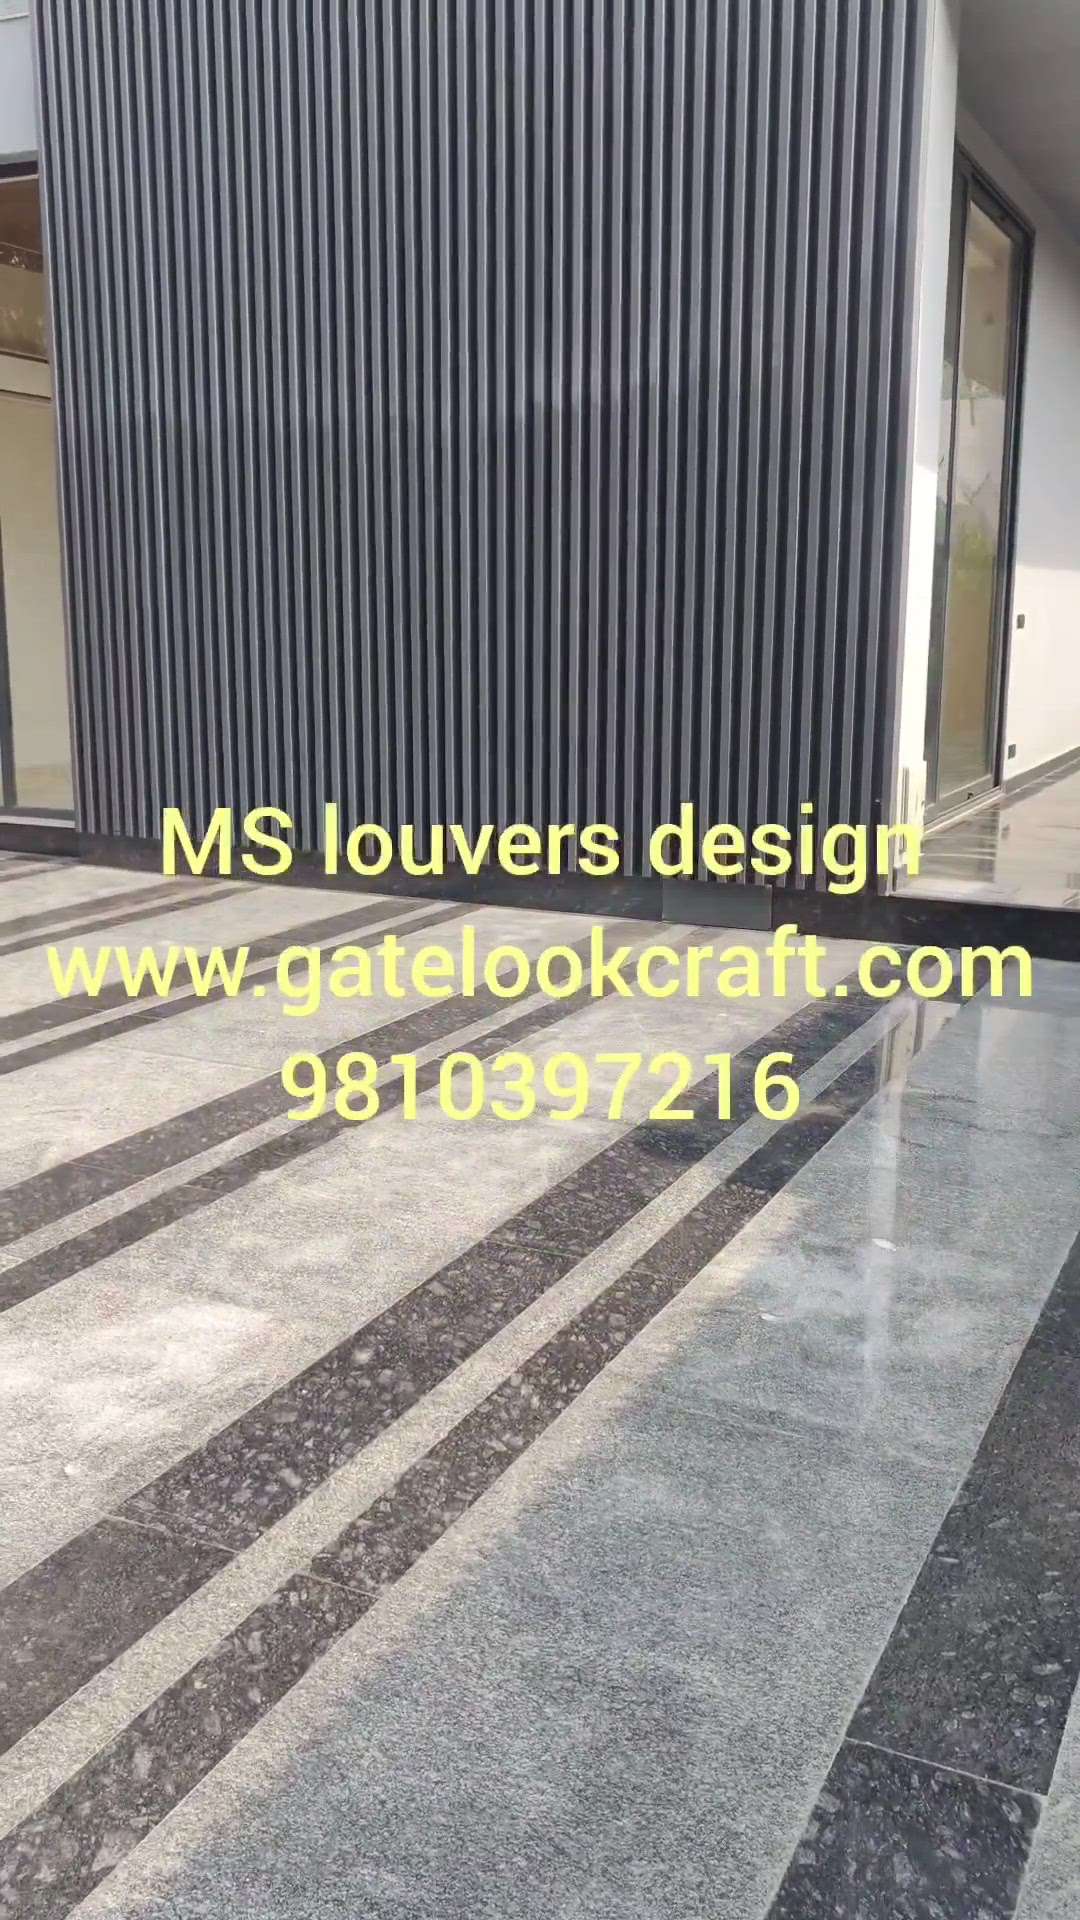 MS louvers design by Hibza sterling interiors pvt ltd #gatelookcraft #mslouvers #interior #exterior #architecture #design #aluminiumlouver #louvers #gates